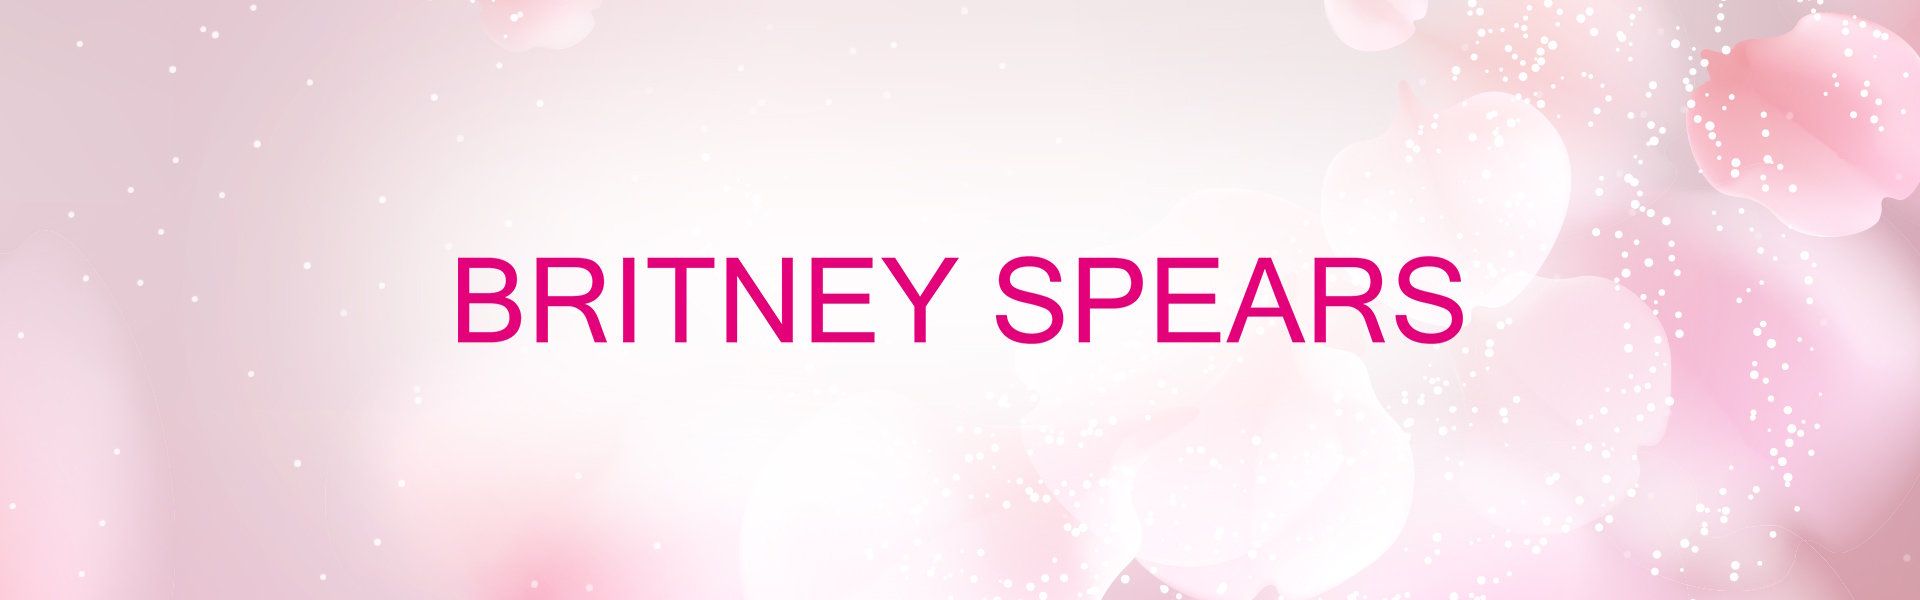 Britney Spears Fantasy vartalotuoksu naisille 235 ml 